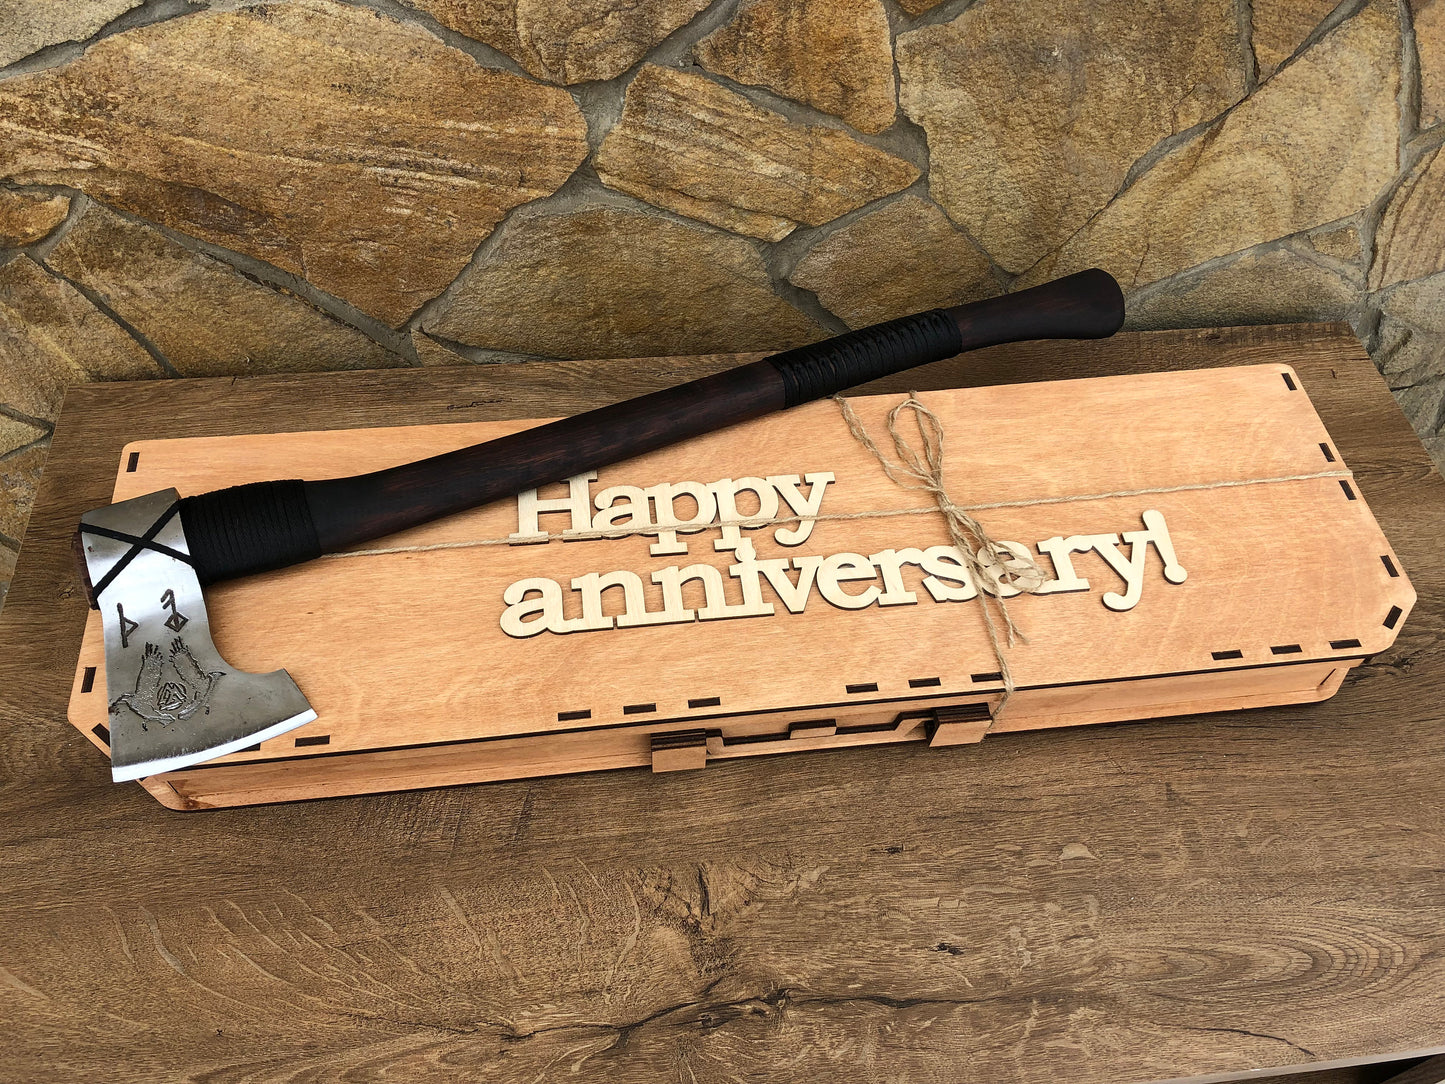 Hatchet, viking axe, tomahawk, gift box, axe gift, 6th anniversary, 11th anniversary, viking camp kit, viking gifts, iron gifts, anniversary